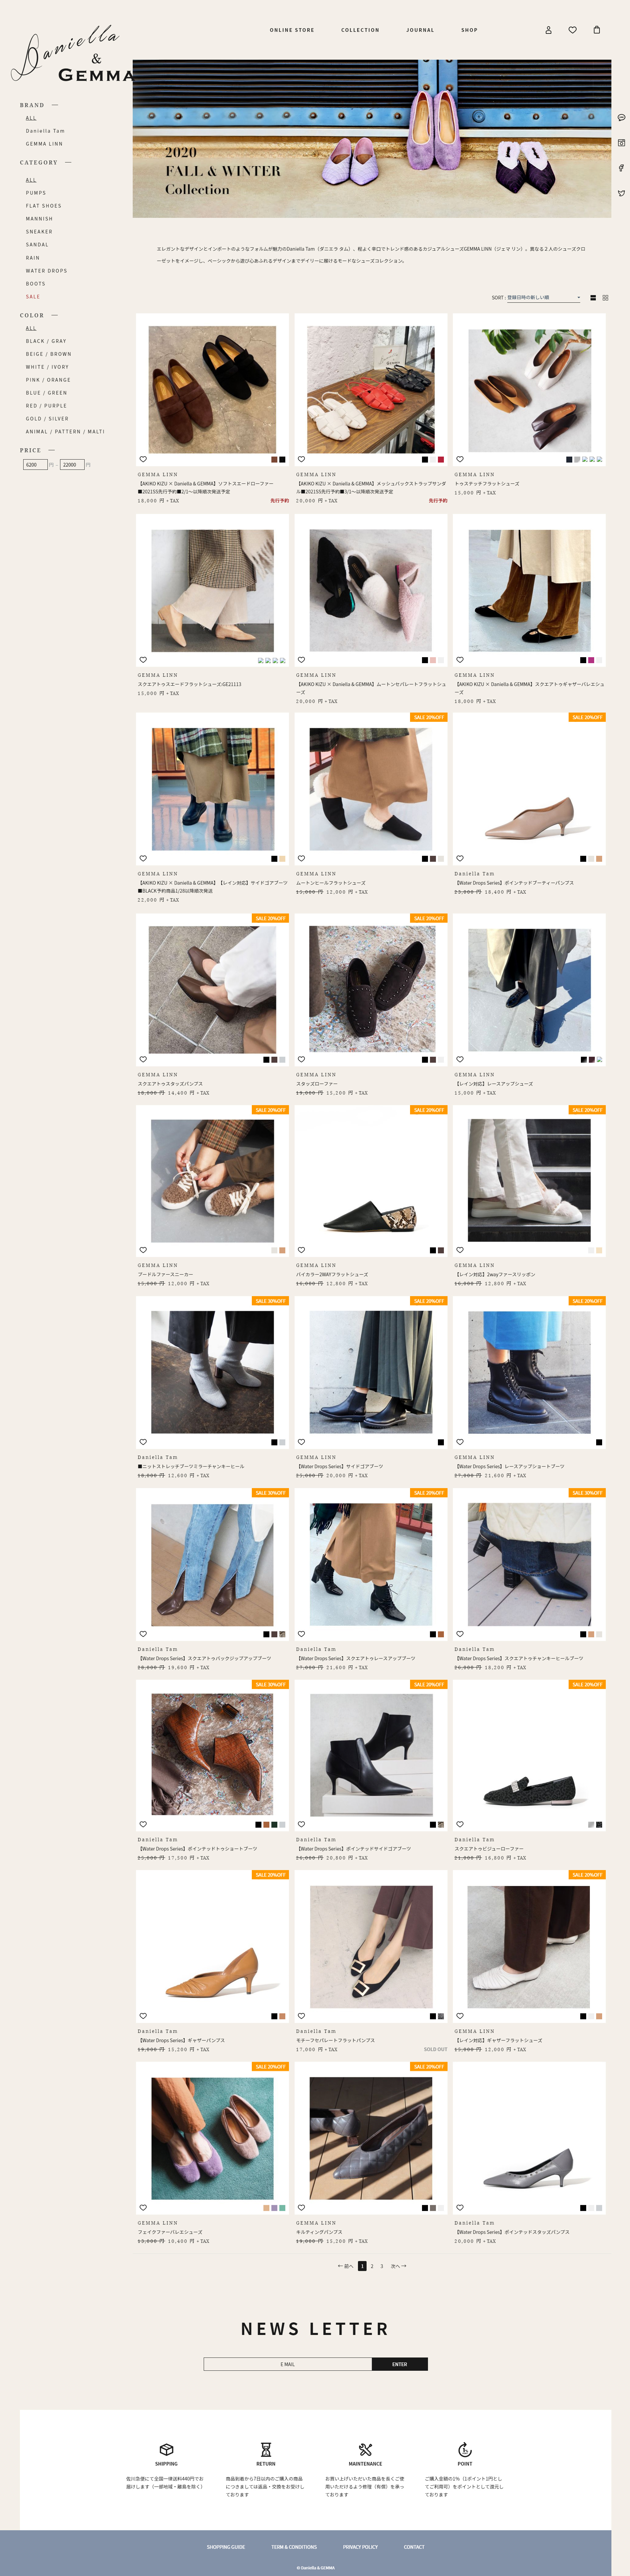 Daniella & GEMMA女鞋网站设计